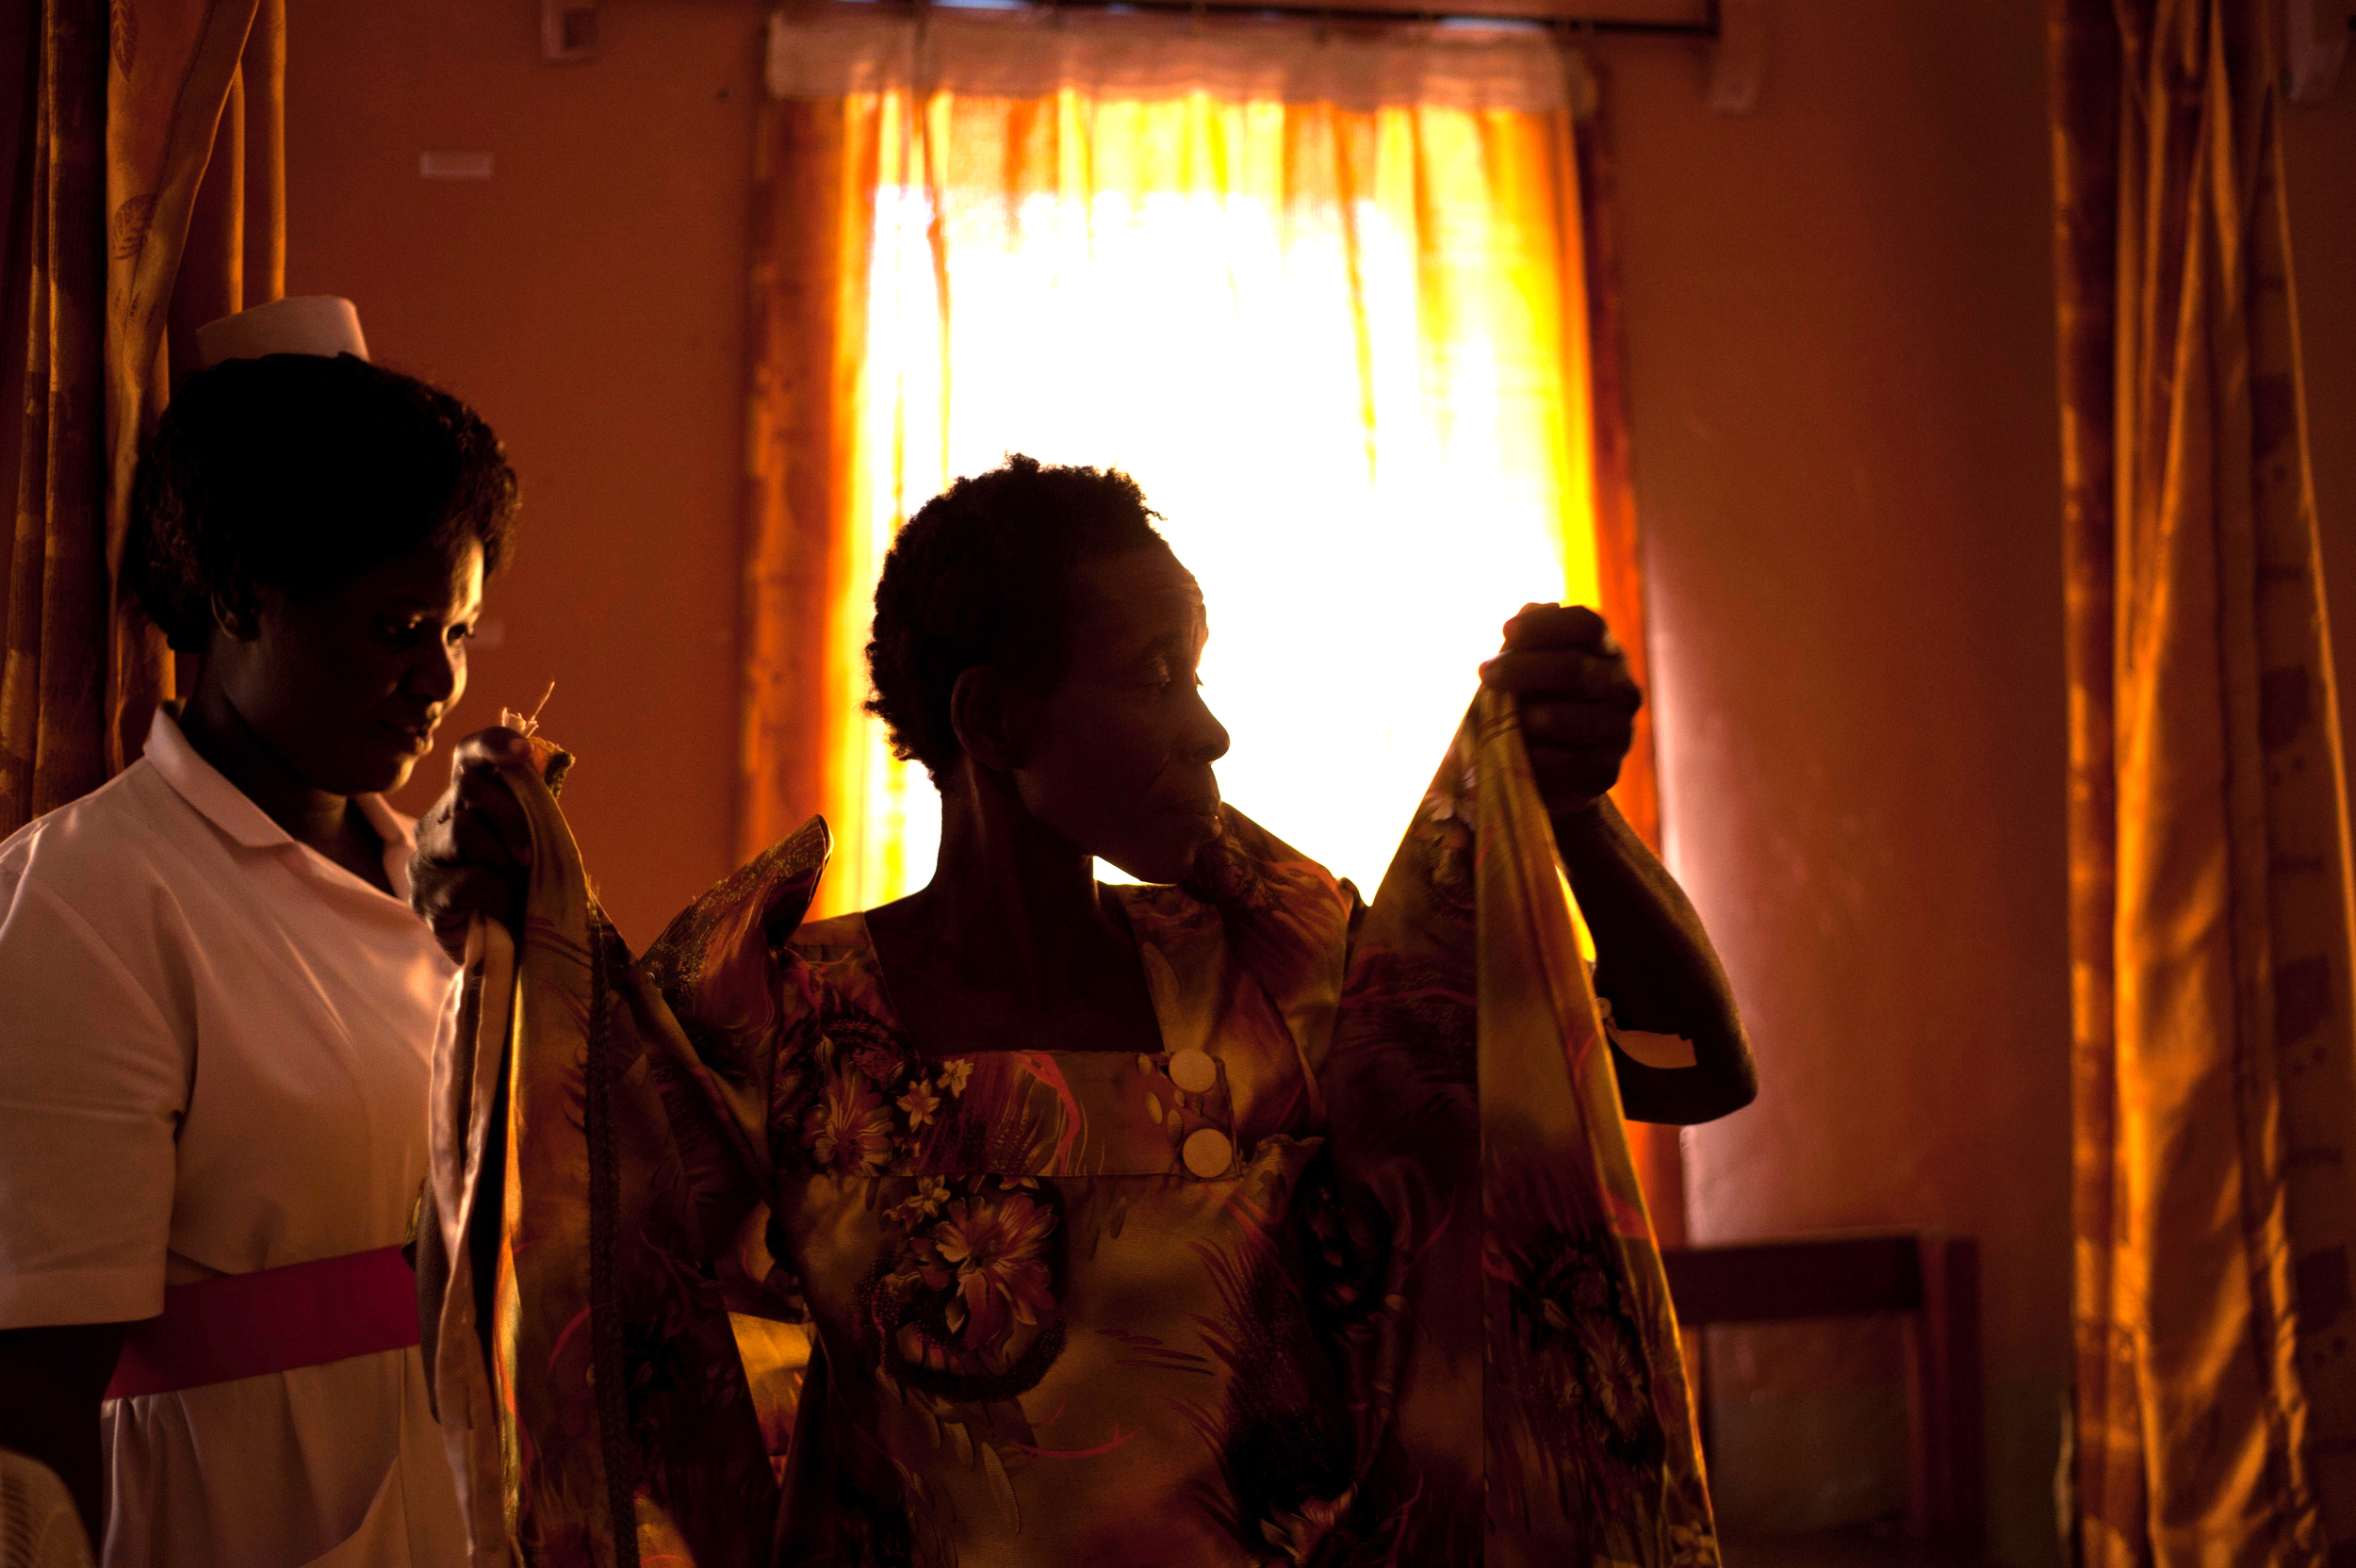  A patient dresses after a scan,&nbsp; Kamuli, Uganda.  